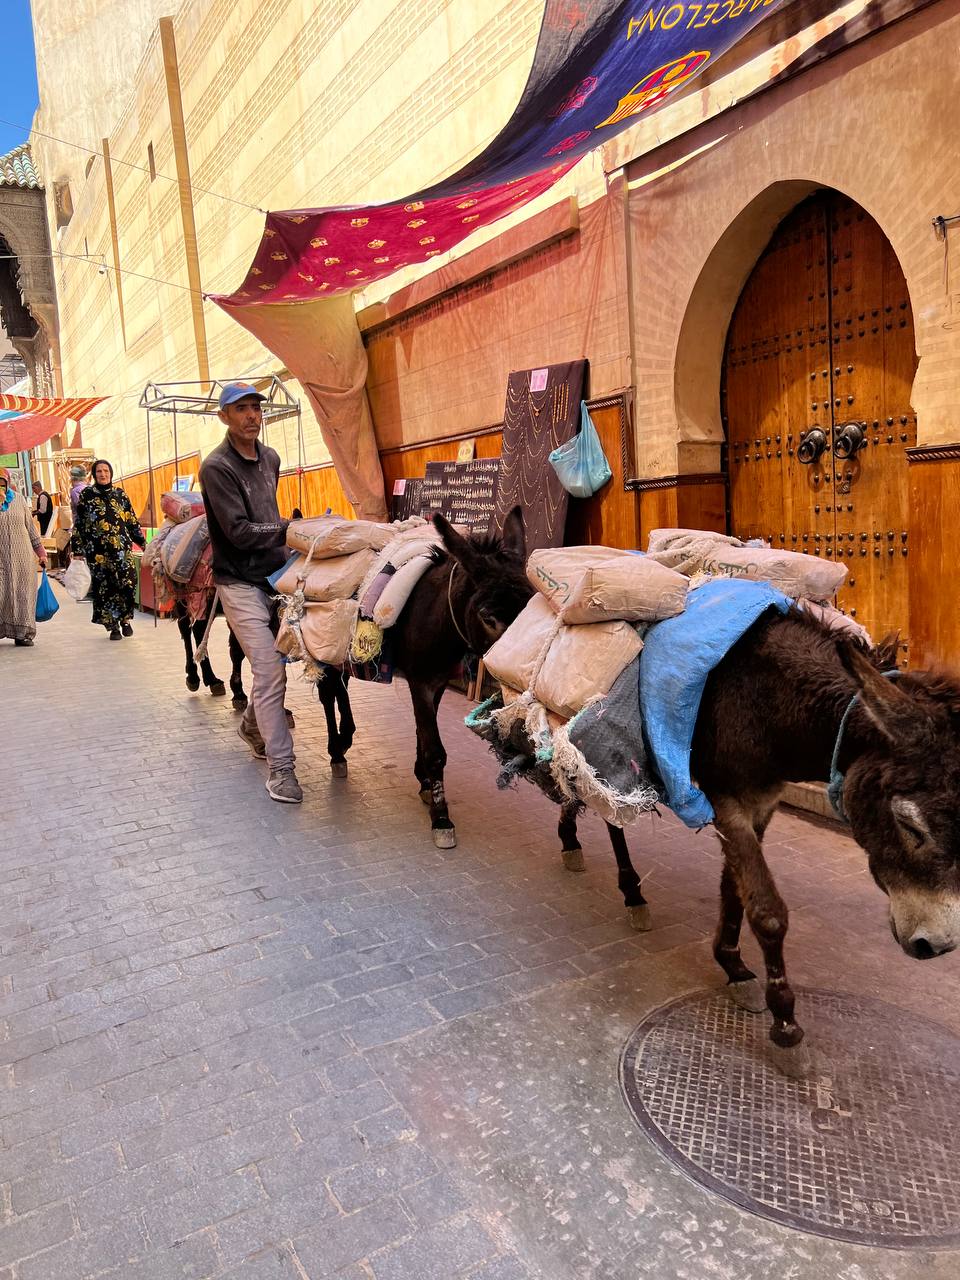 караван Африка люди на ослах Касабланка